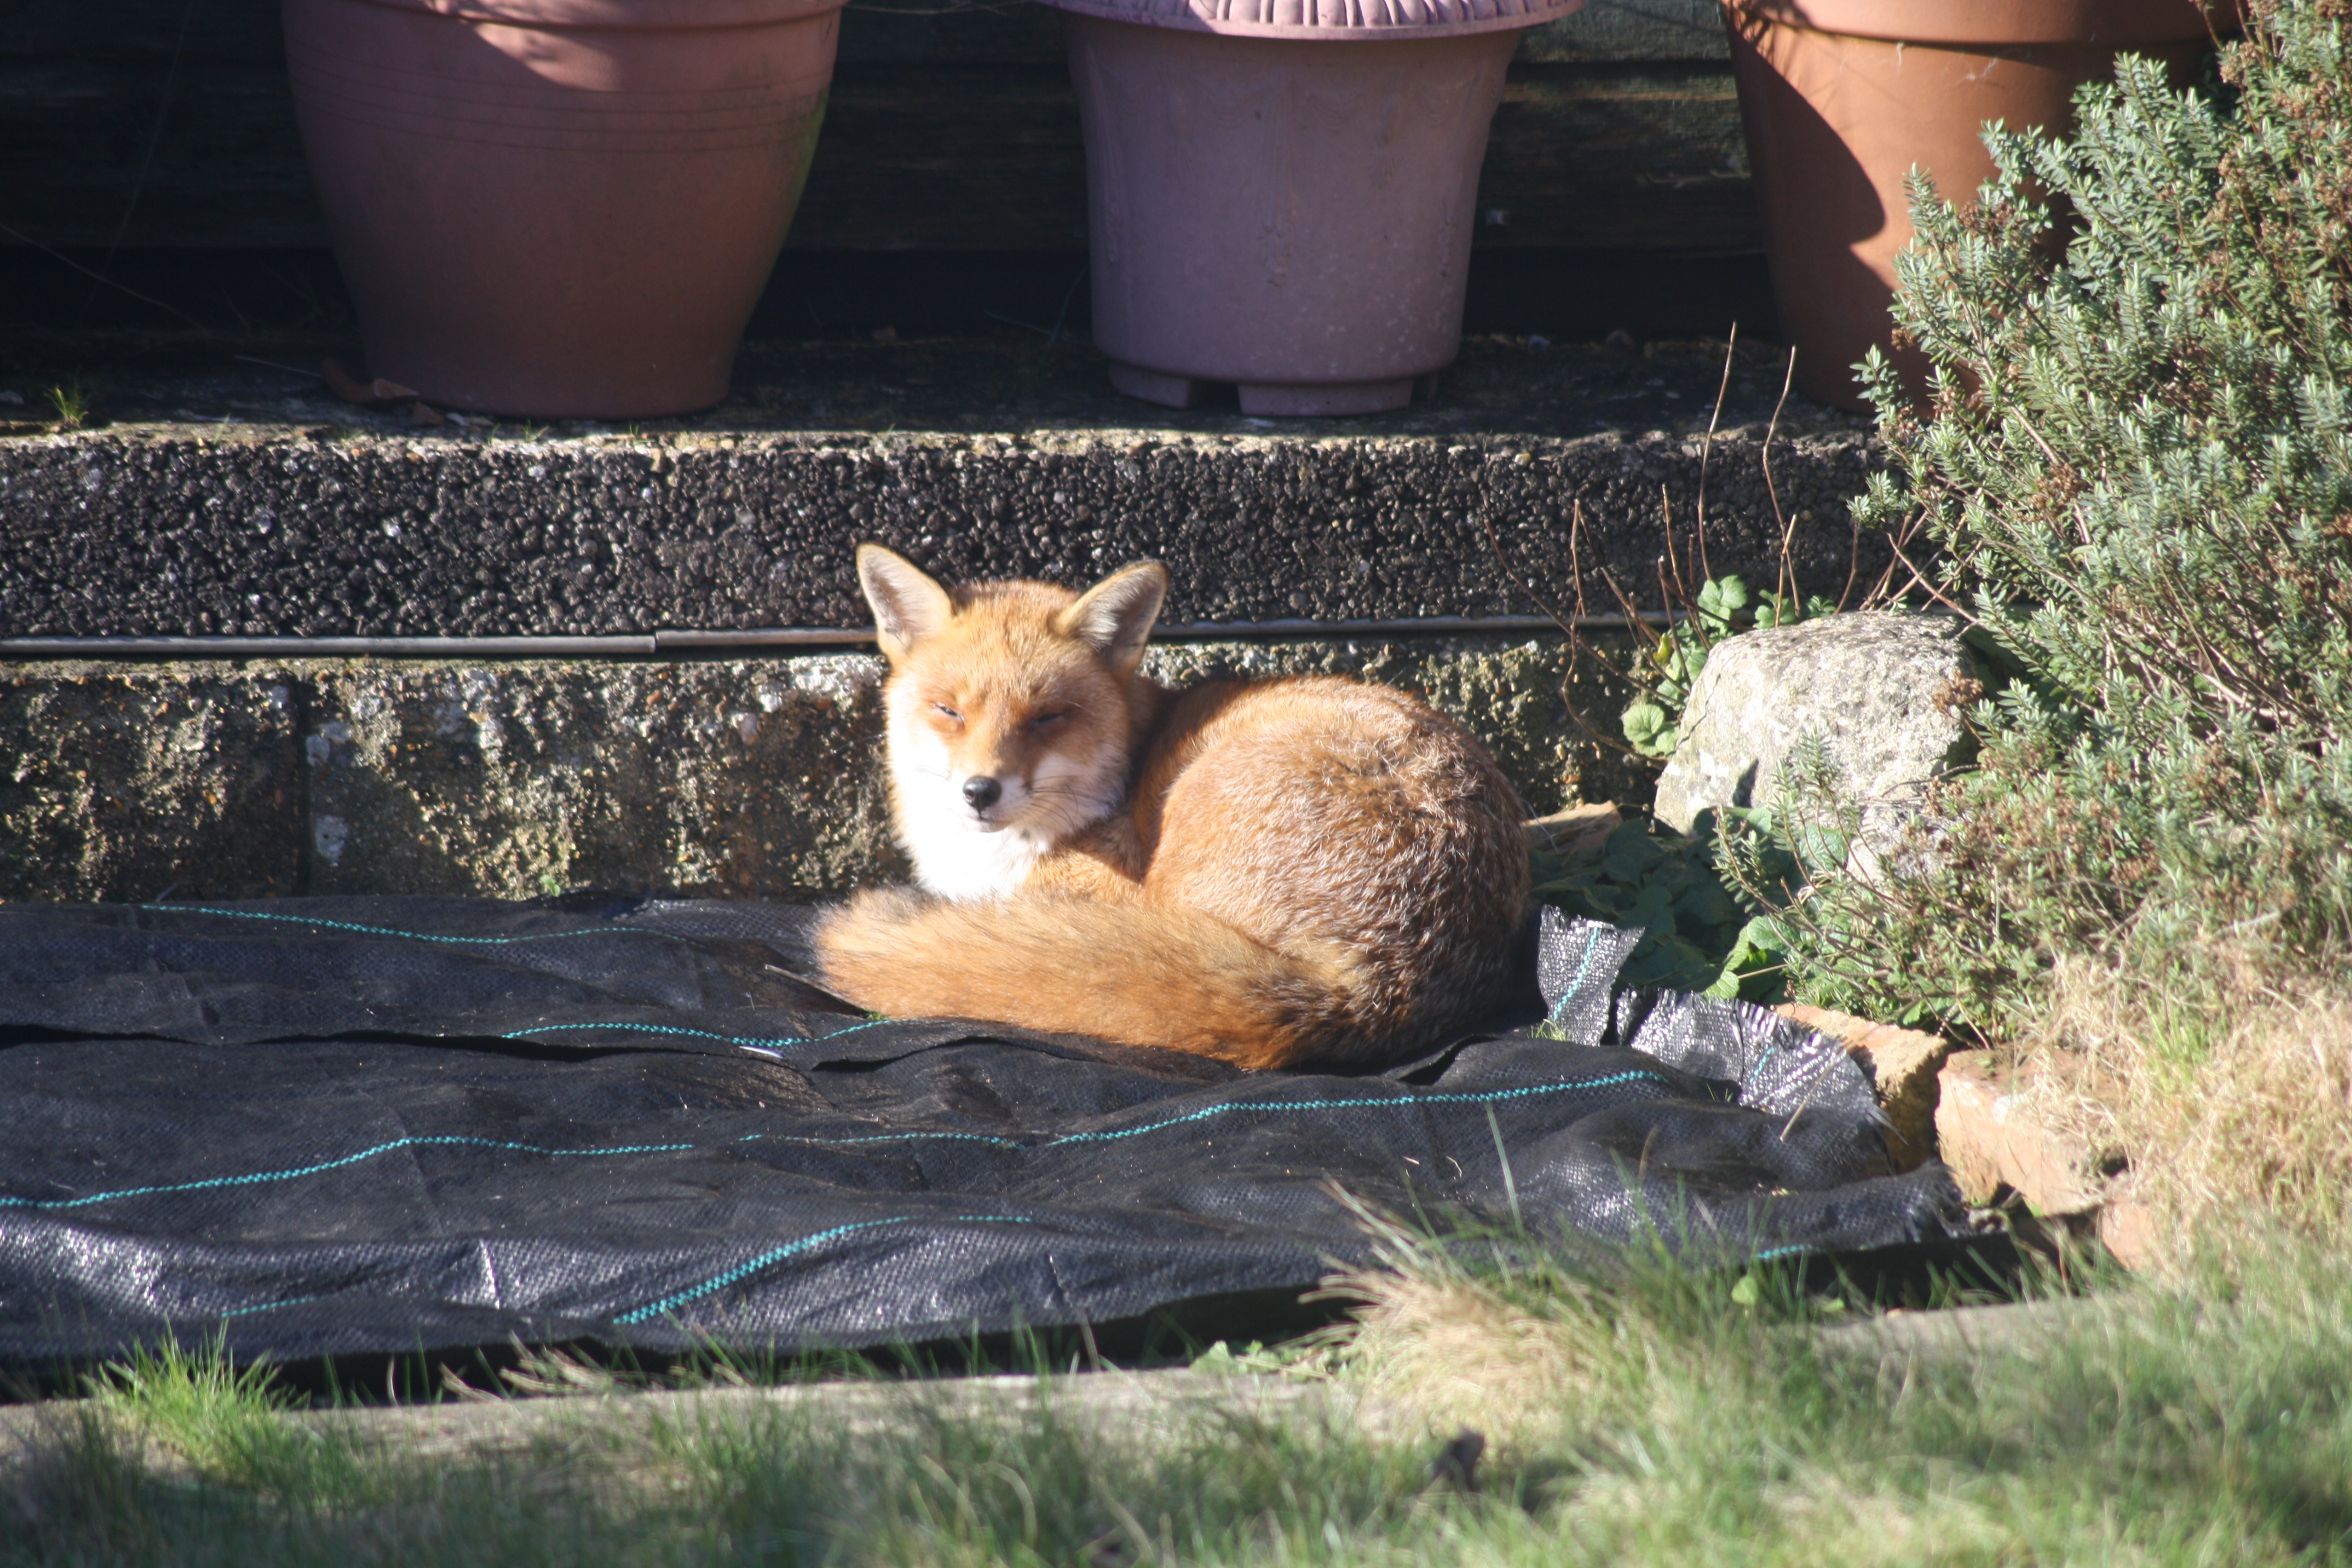 A fox curled up on tarpaulin